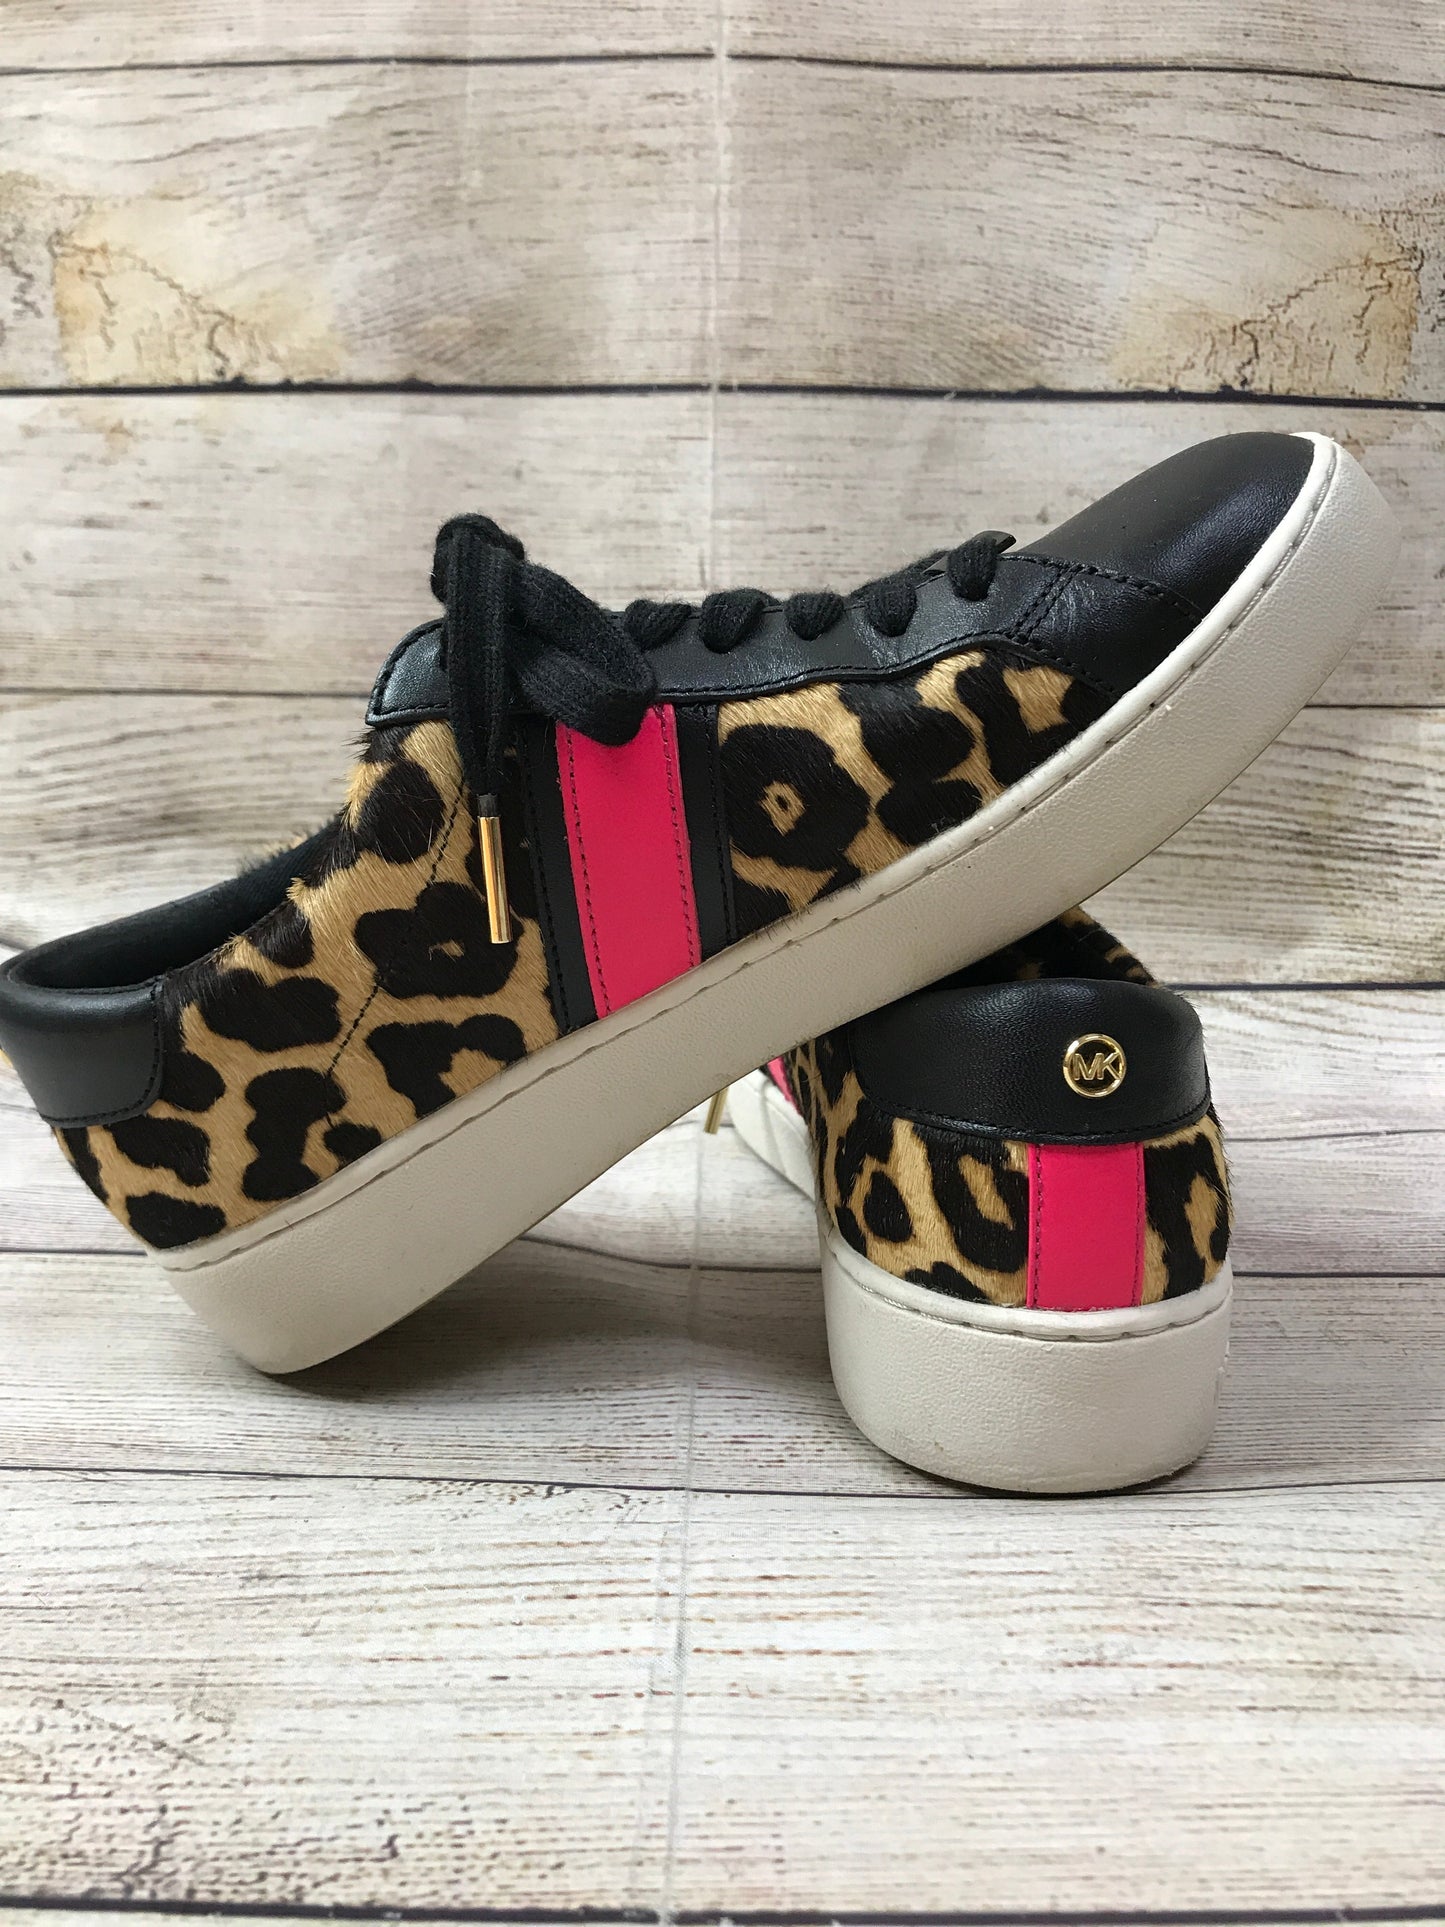 Animal Print Shoes Sneakers Michael Kors, Size 7